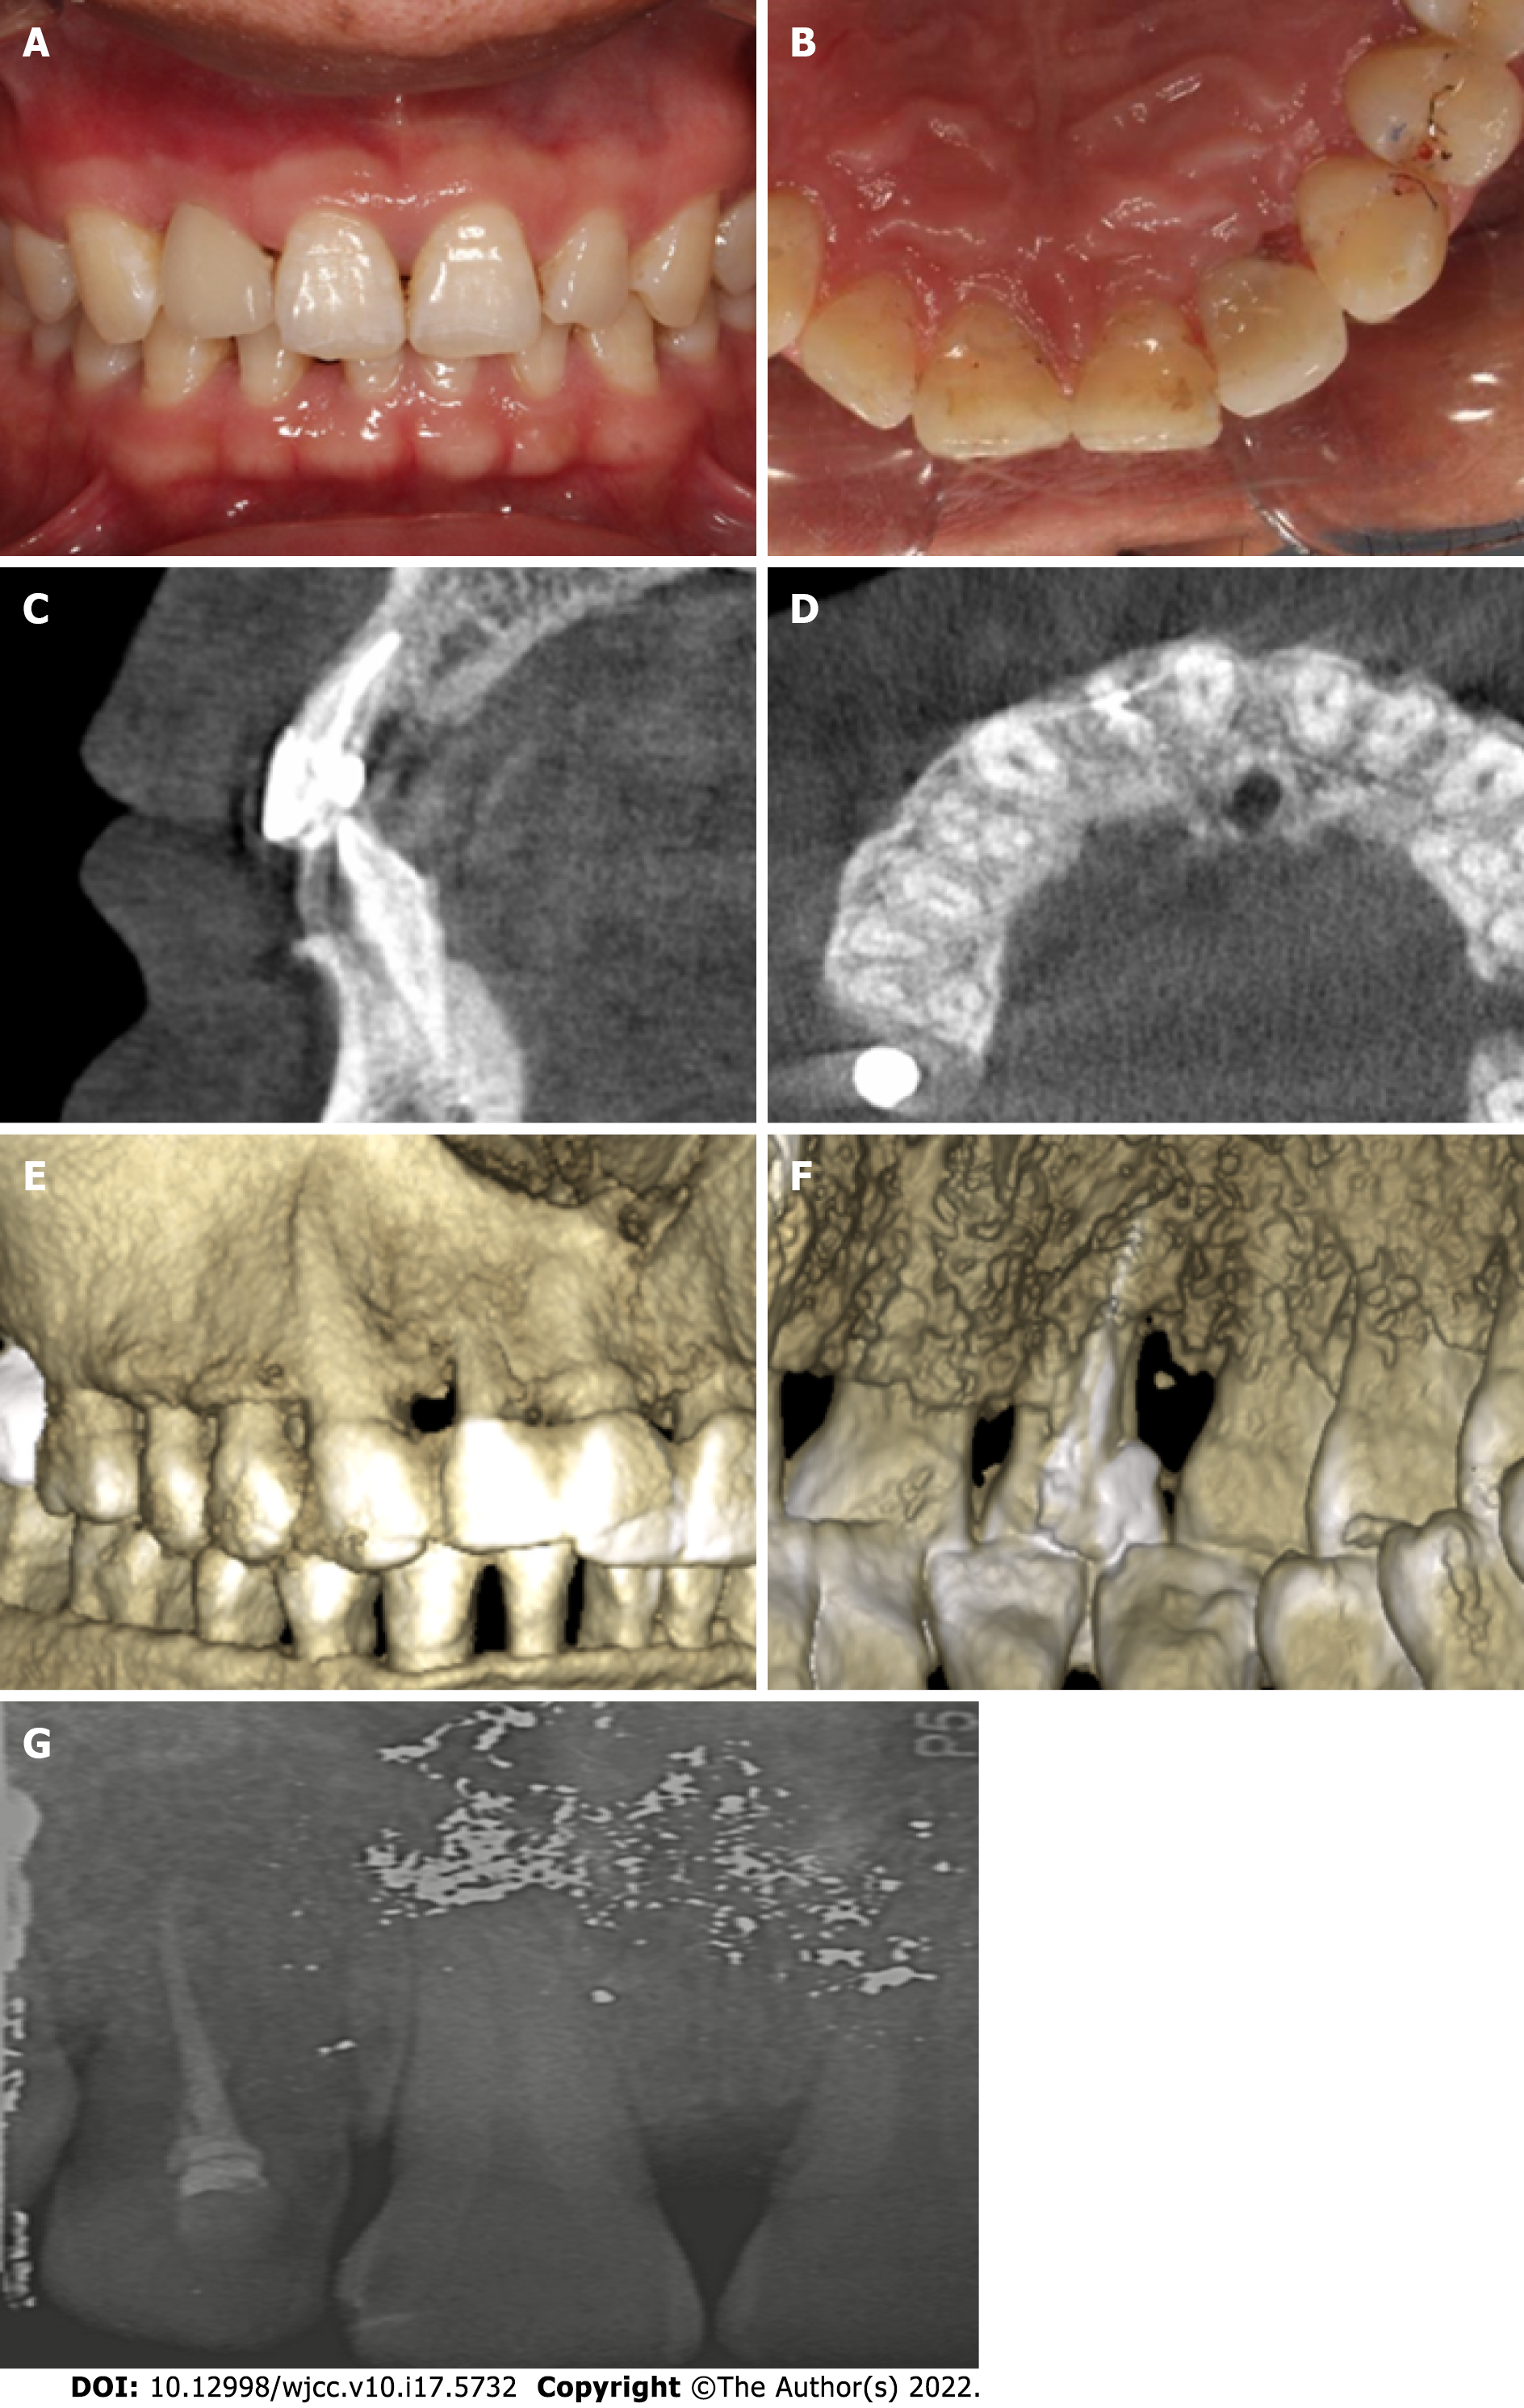 8 mm periodontal pocket depth on palatal side of 21